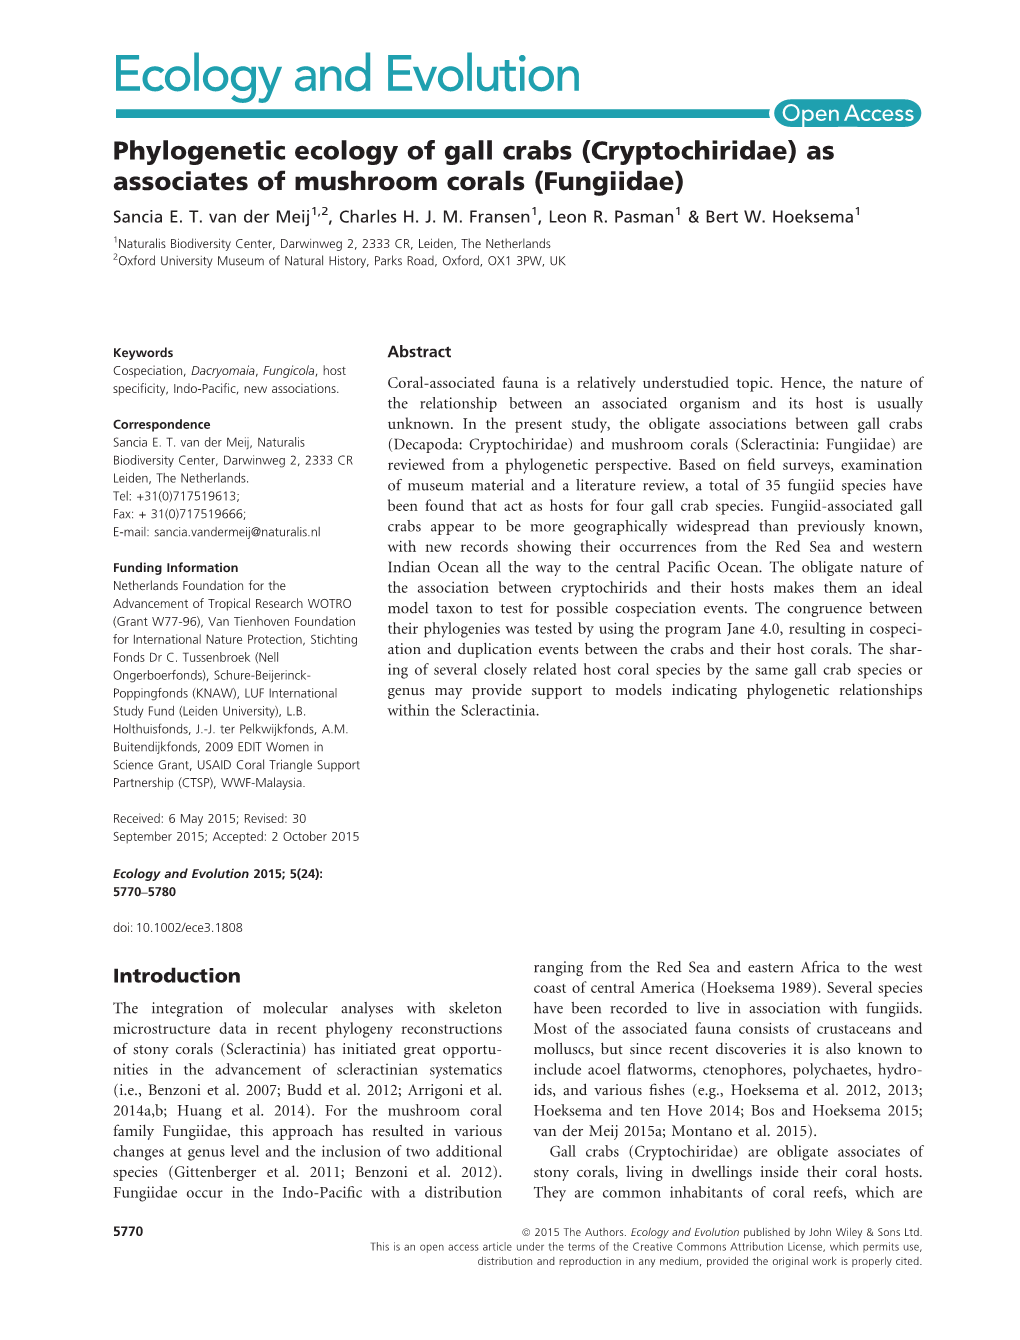 Phylogenetic Ecology of Gall Crabs (Cryptochiridae) As Associates of Mushroom Corals (Fungiidae) Sancia E